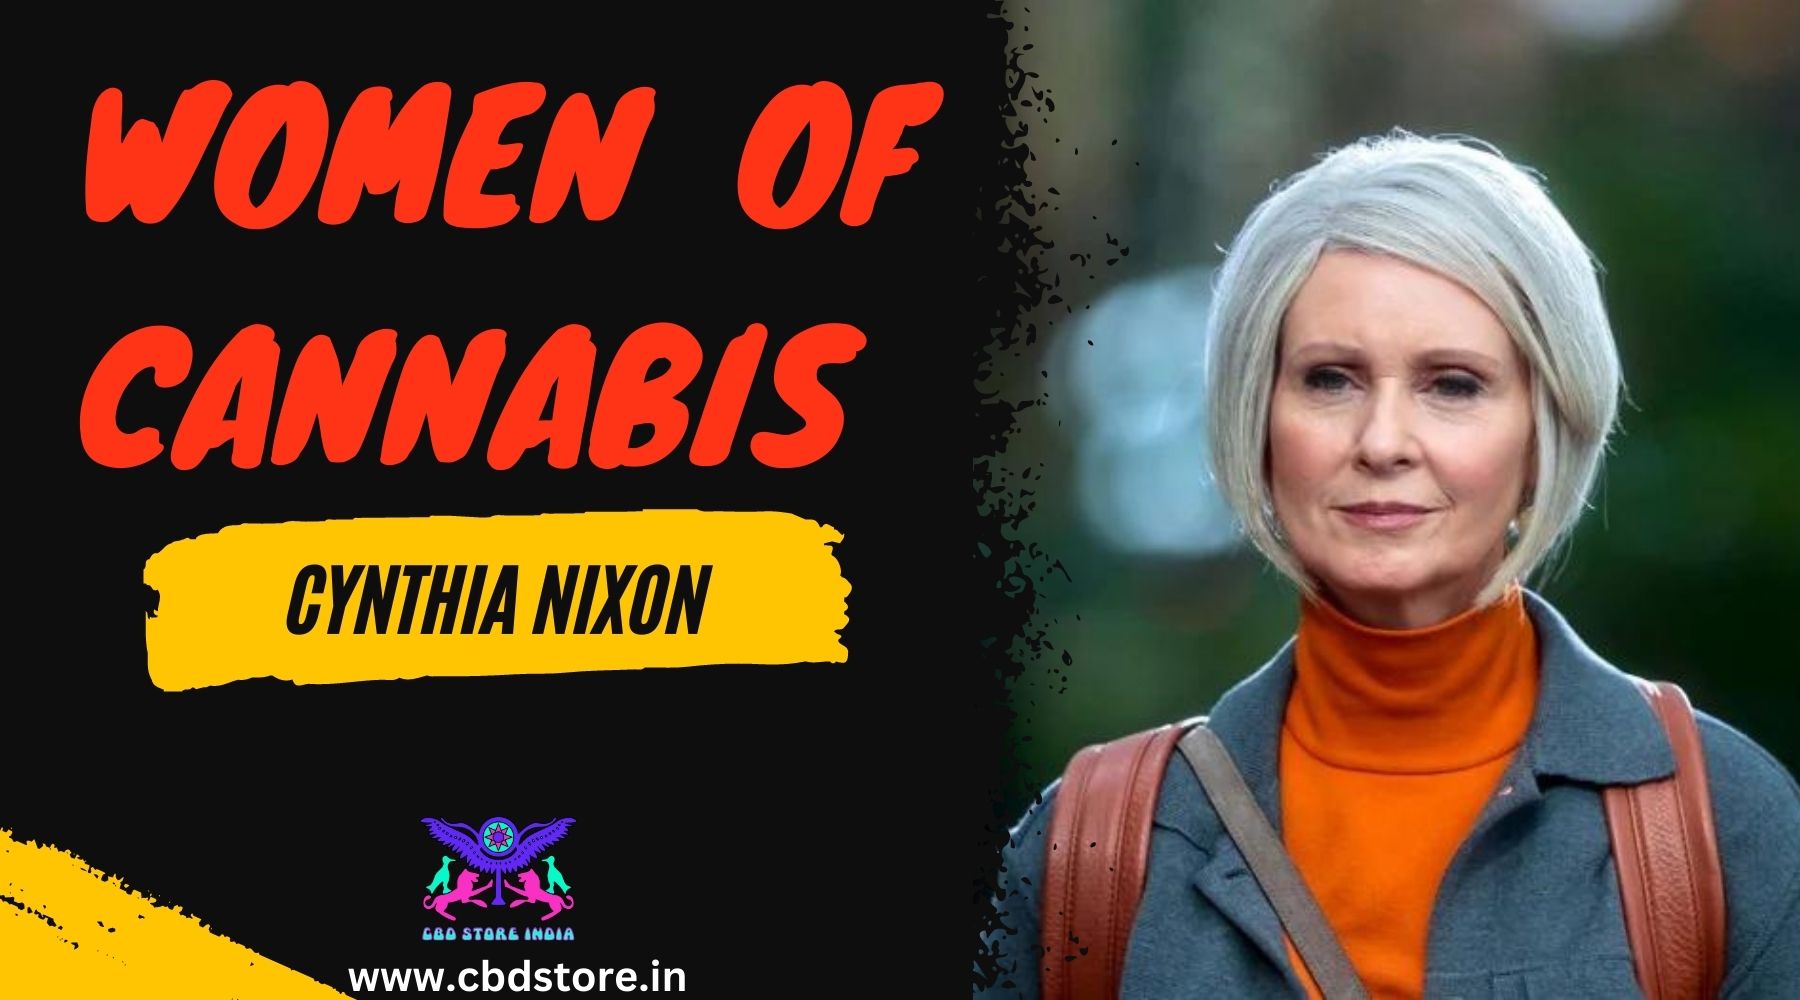 Women of Cannabis: Cynthia Nixon raises her voice for Cannabis - CBD Store India